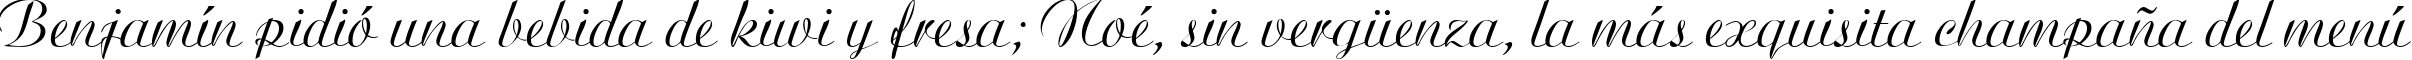 Пример написания шрифтом Ariston Normal текста на испанском